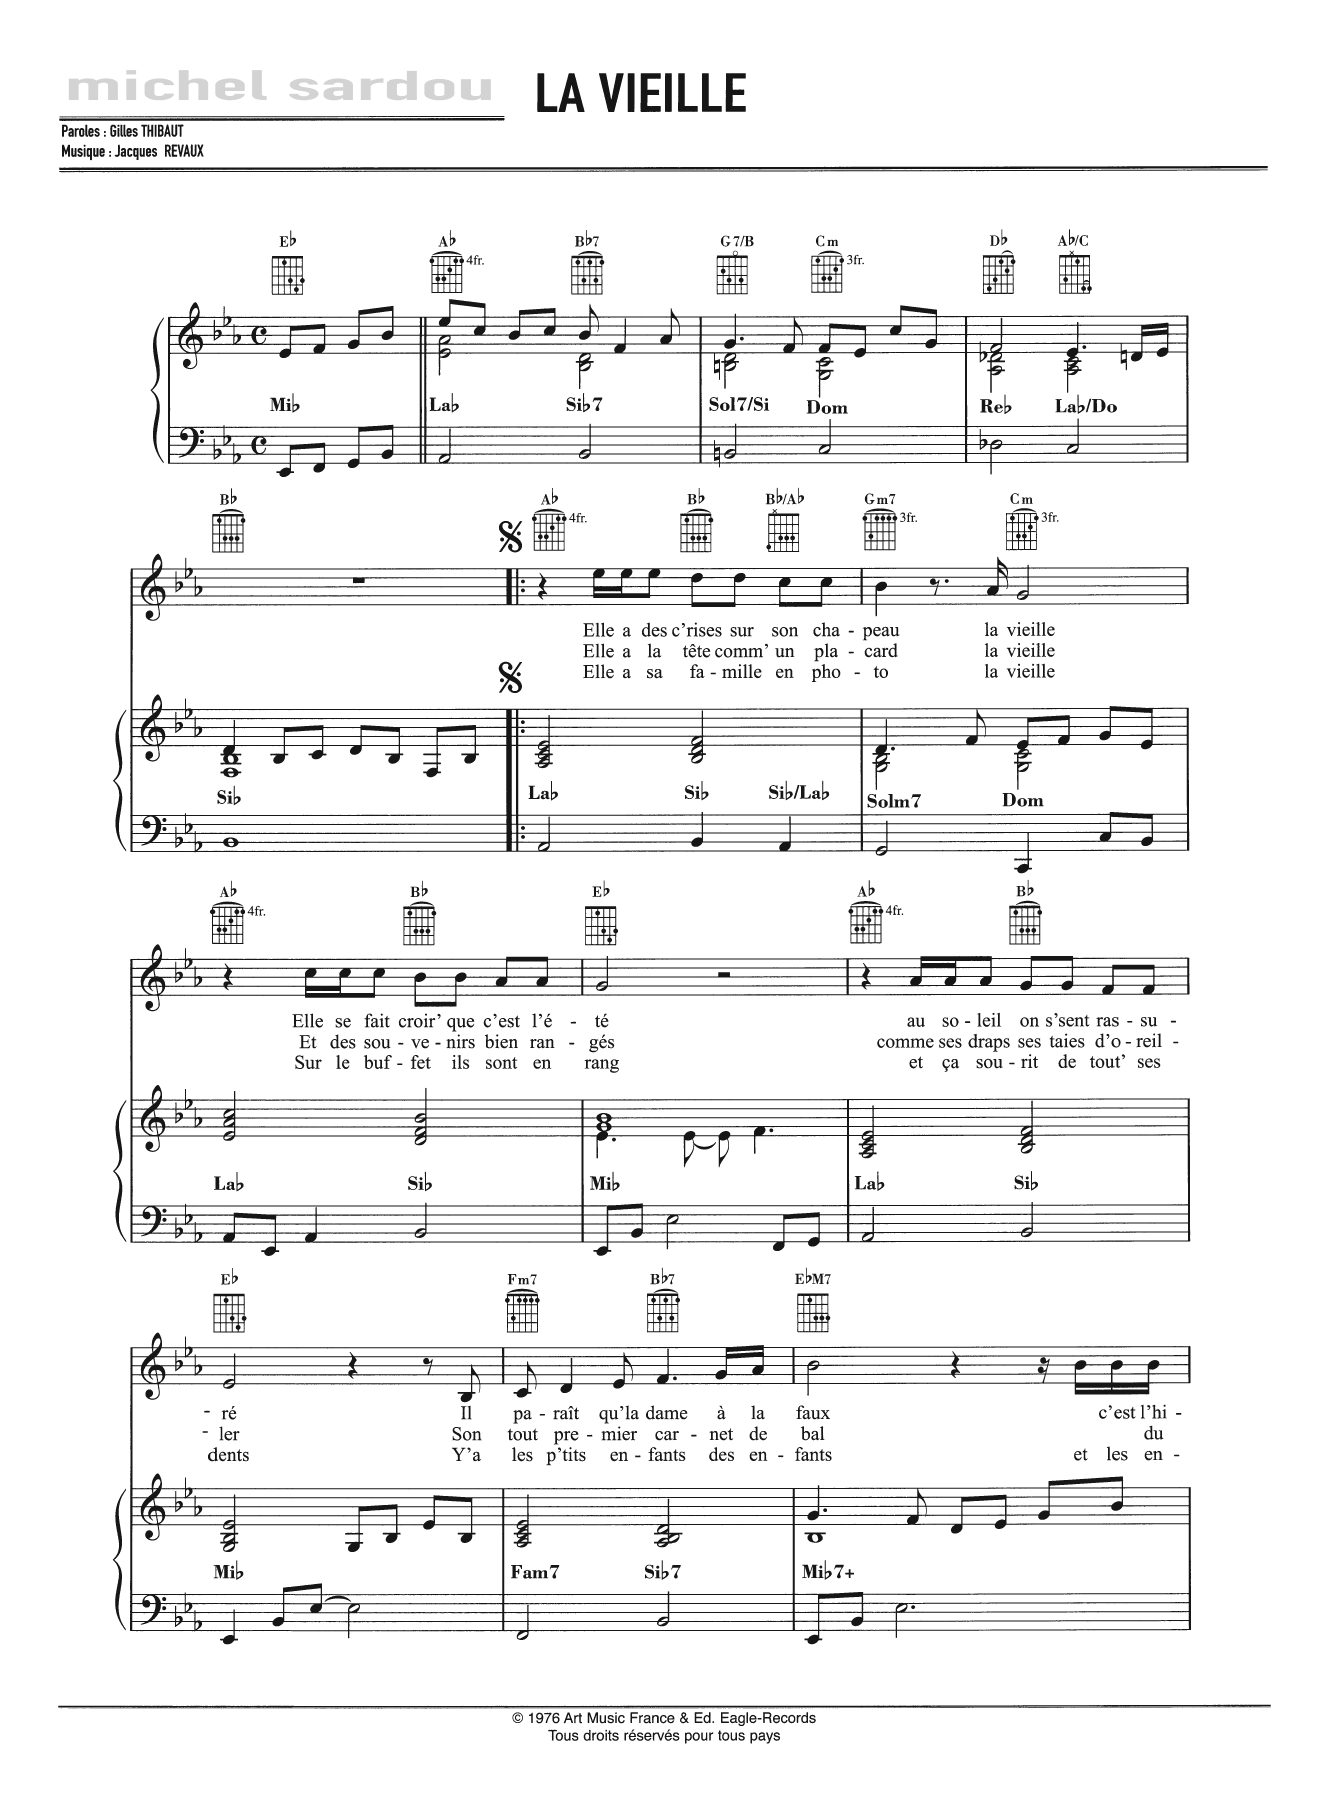 Michel Sardou La Vieille Sheet Music Notes & Chords for Piano, Vocal & Guitar - Download or Print PDF